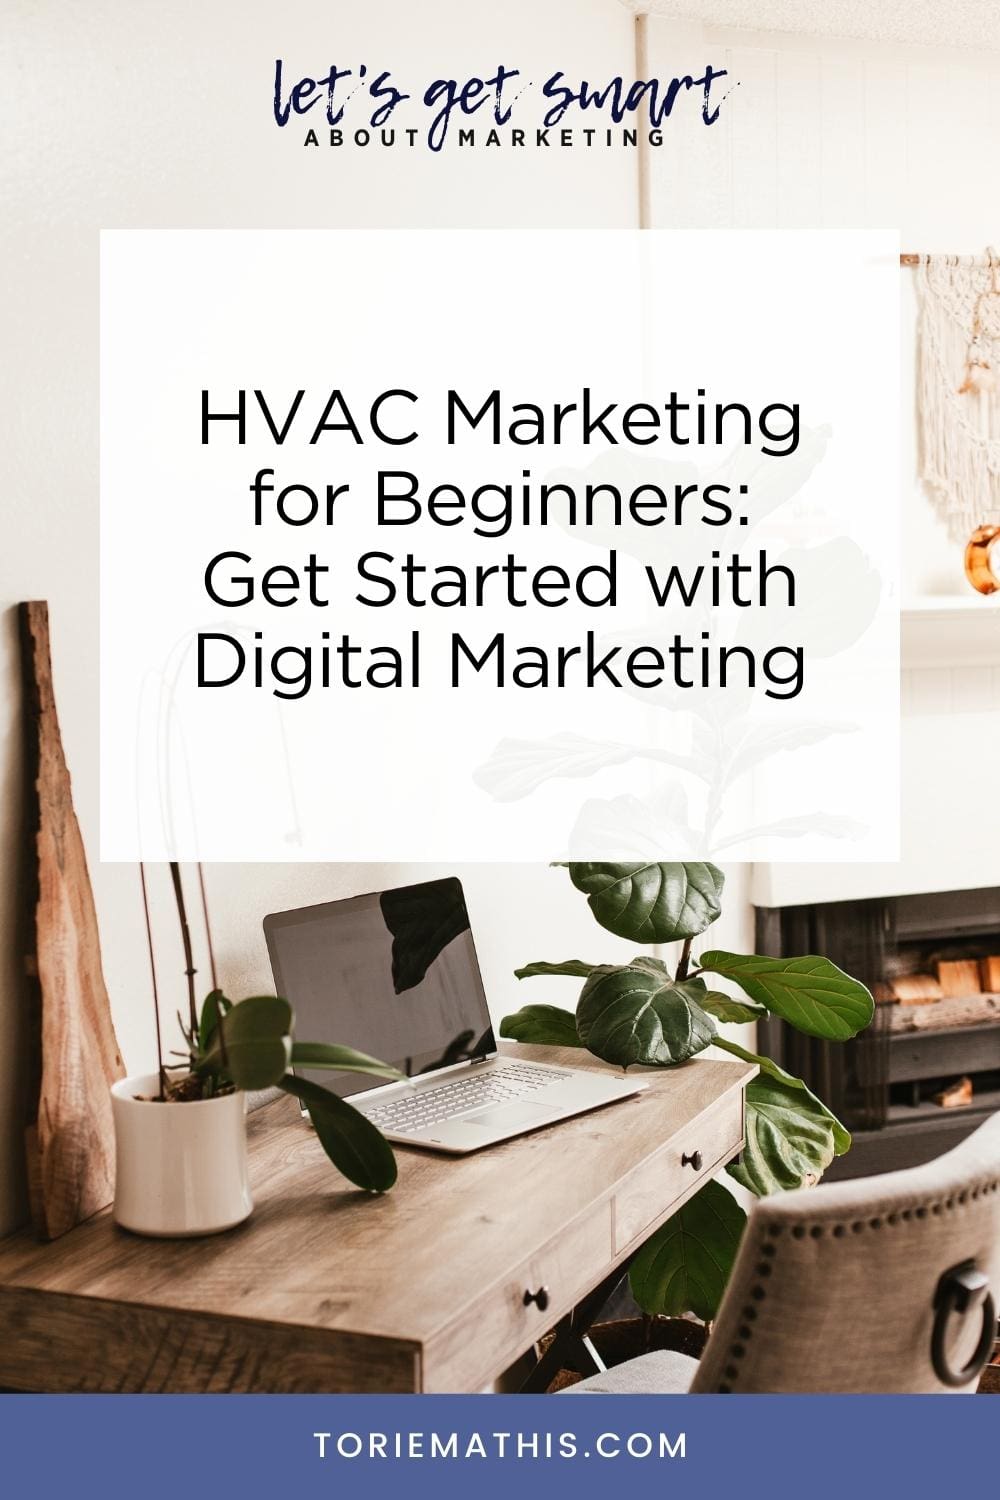 HVAC Marketing for Beginners Get Started with Digital Marketing